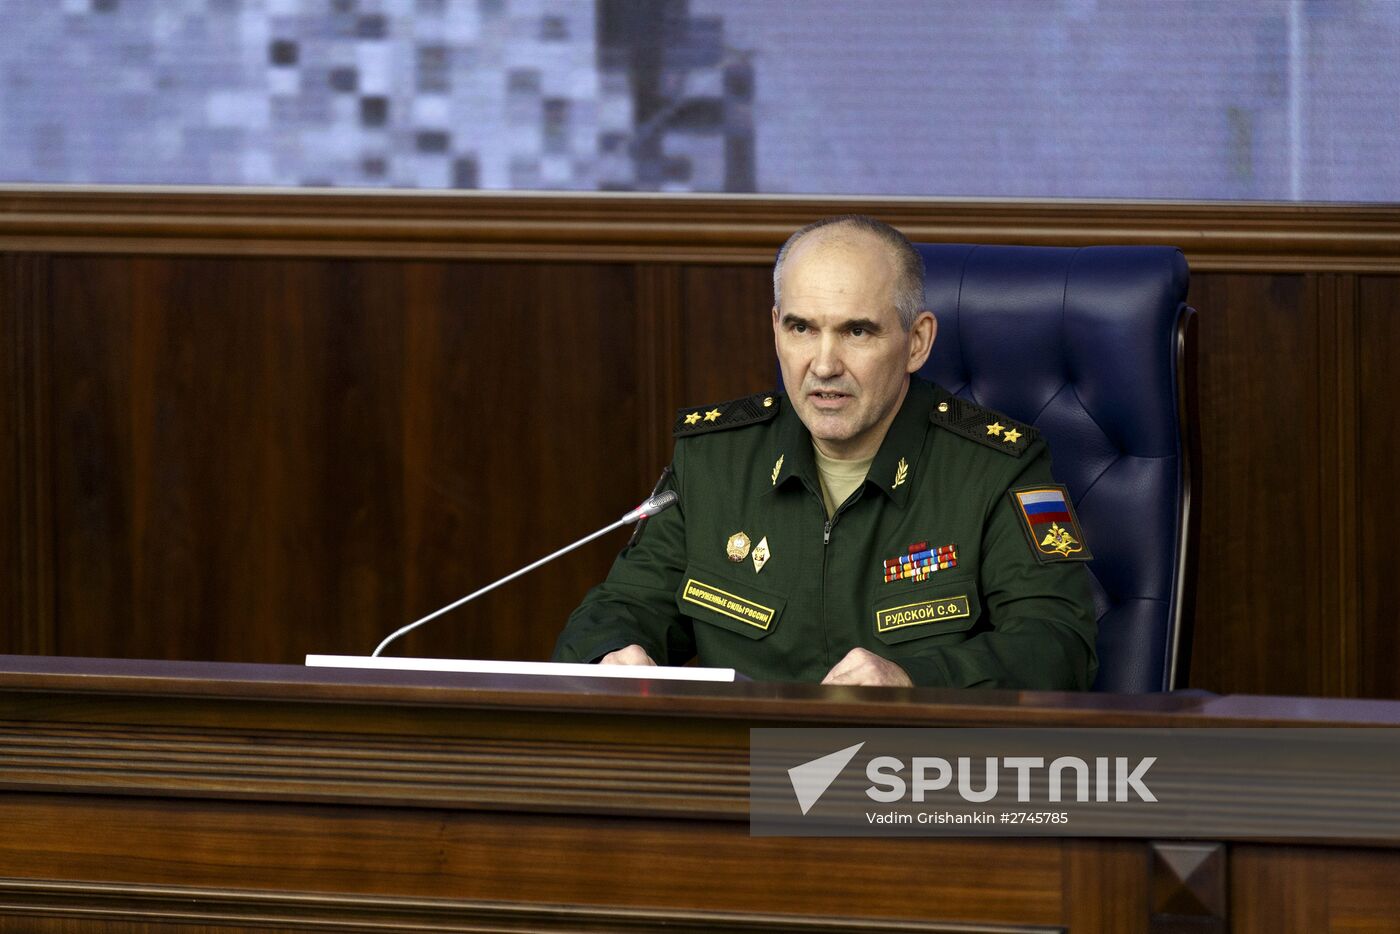 Briefing by Lieutenant General Sergey Rudskoy of the Russian General Staff